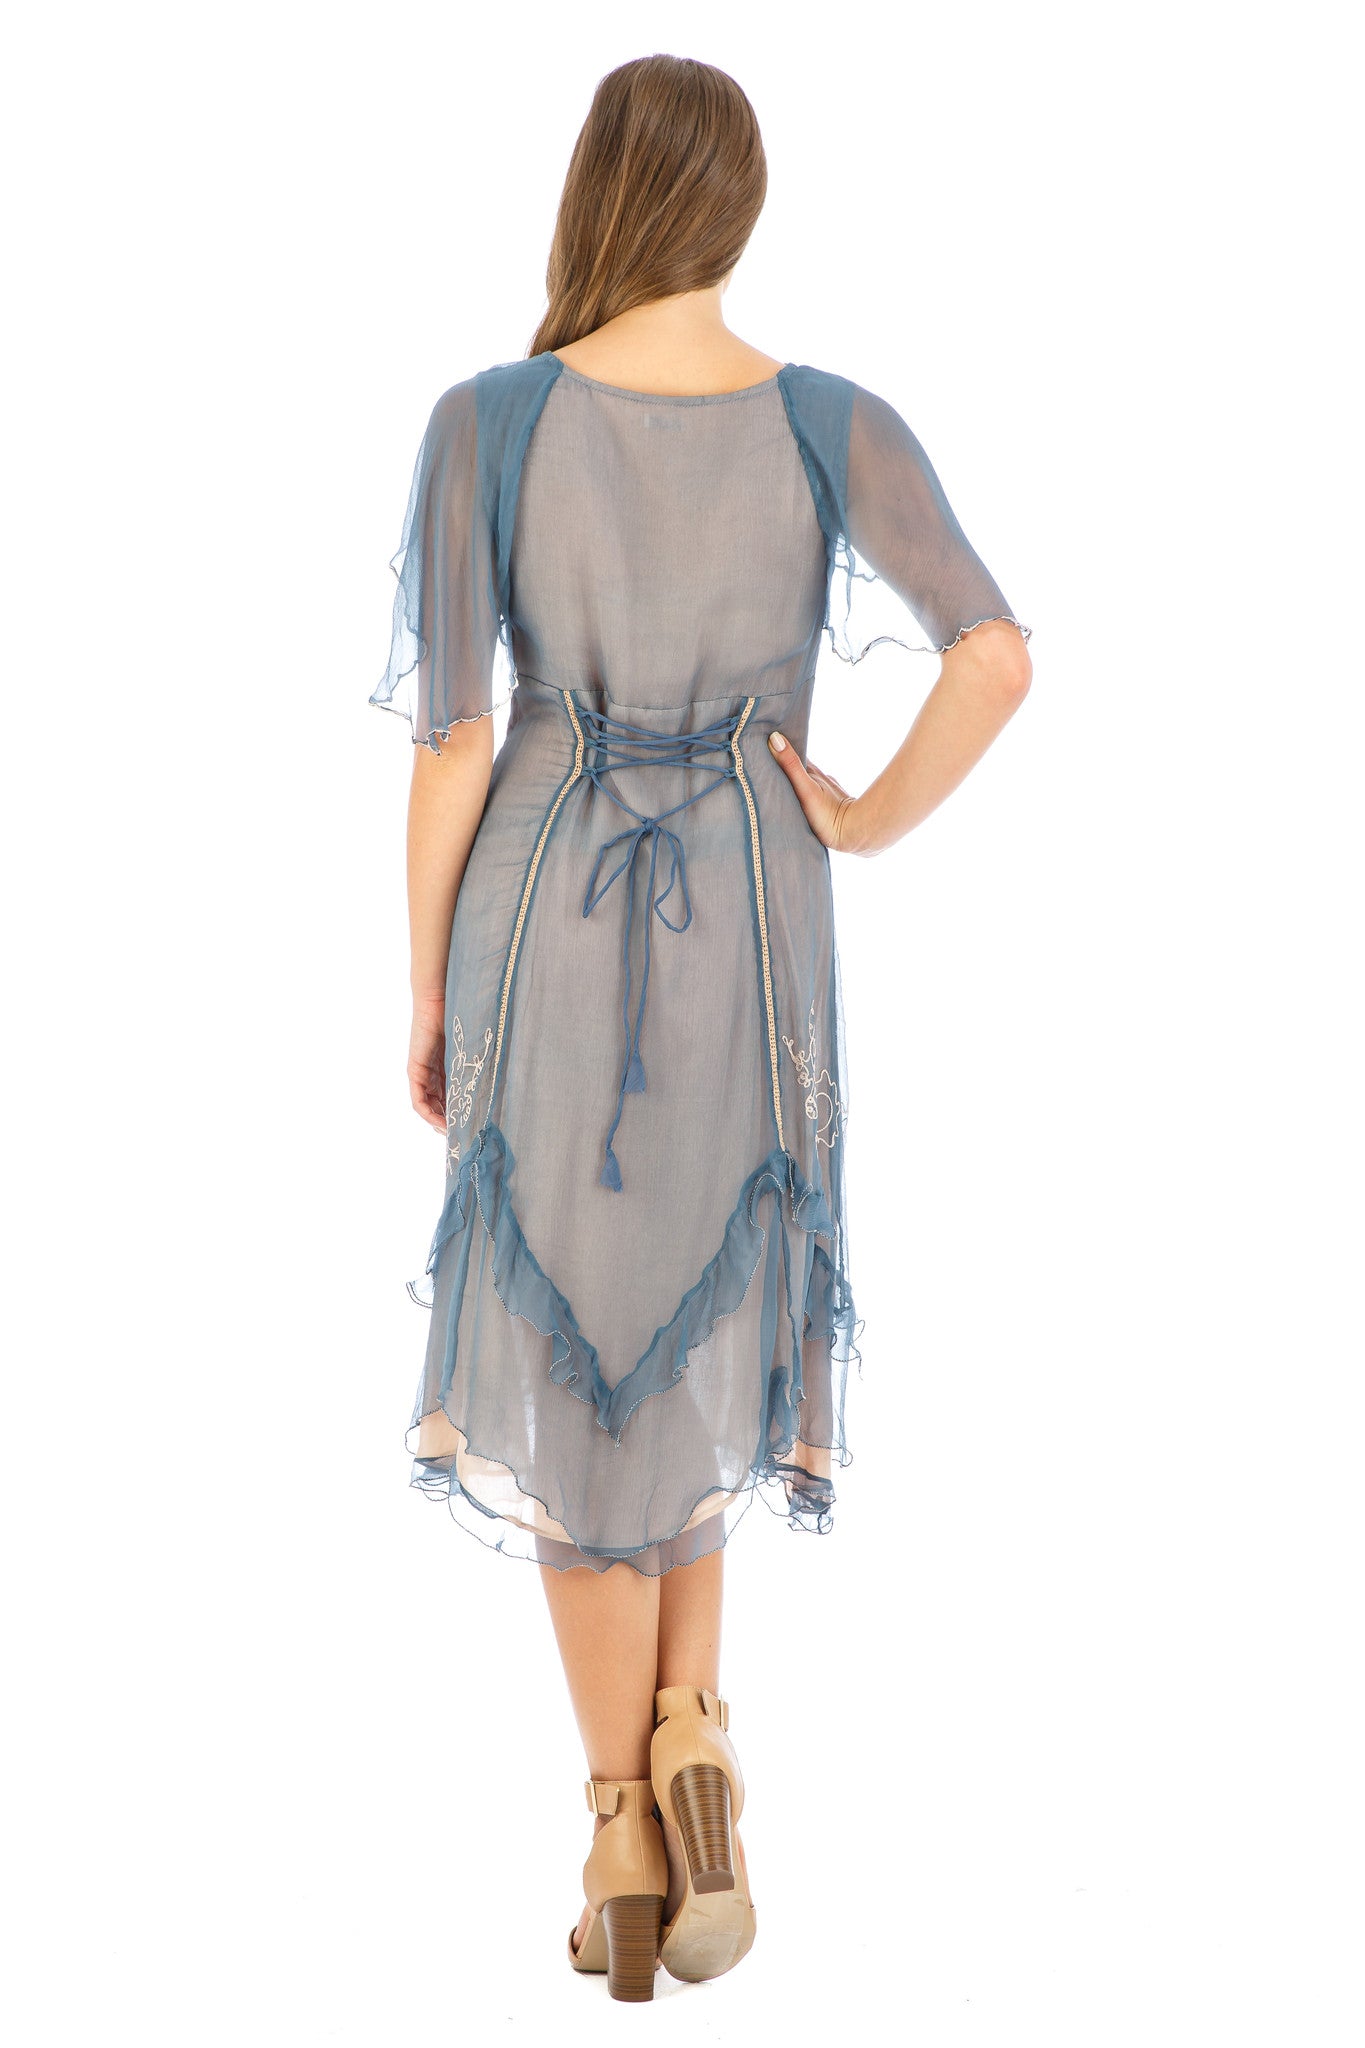 Nataya Jacqueline AL-241 Sapphire Dress - SOLD OUT